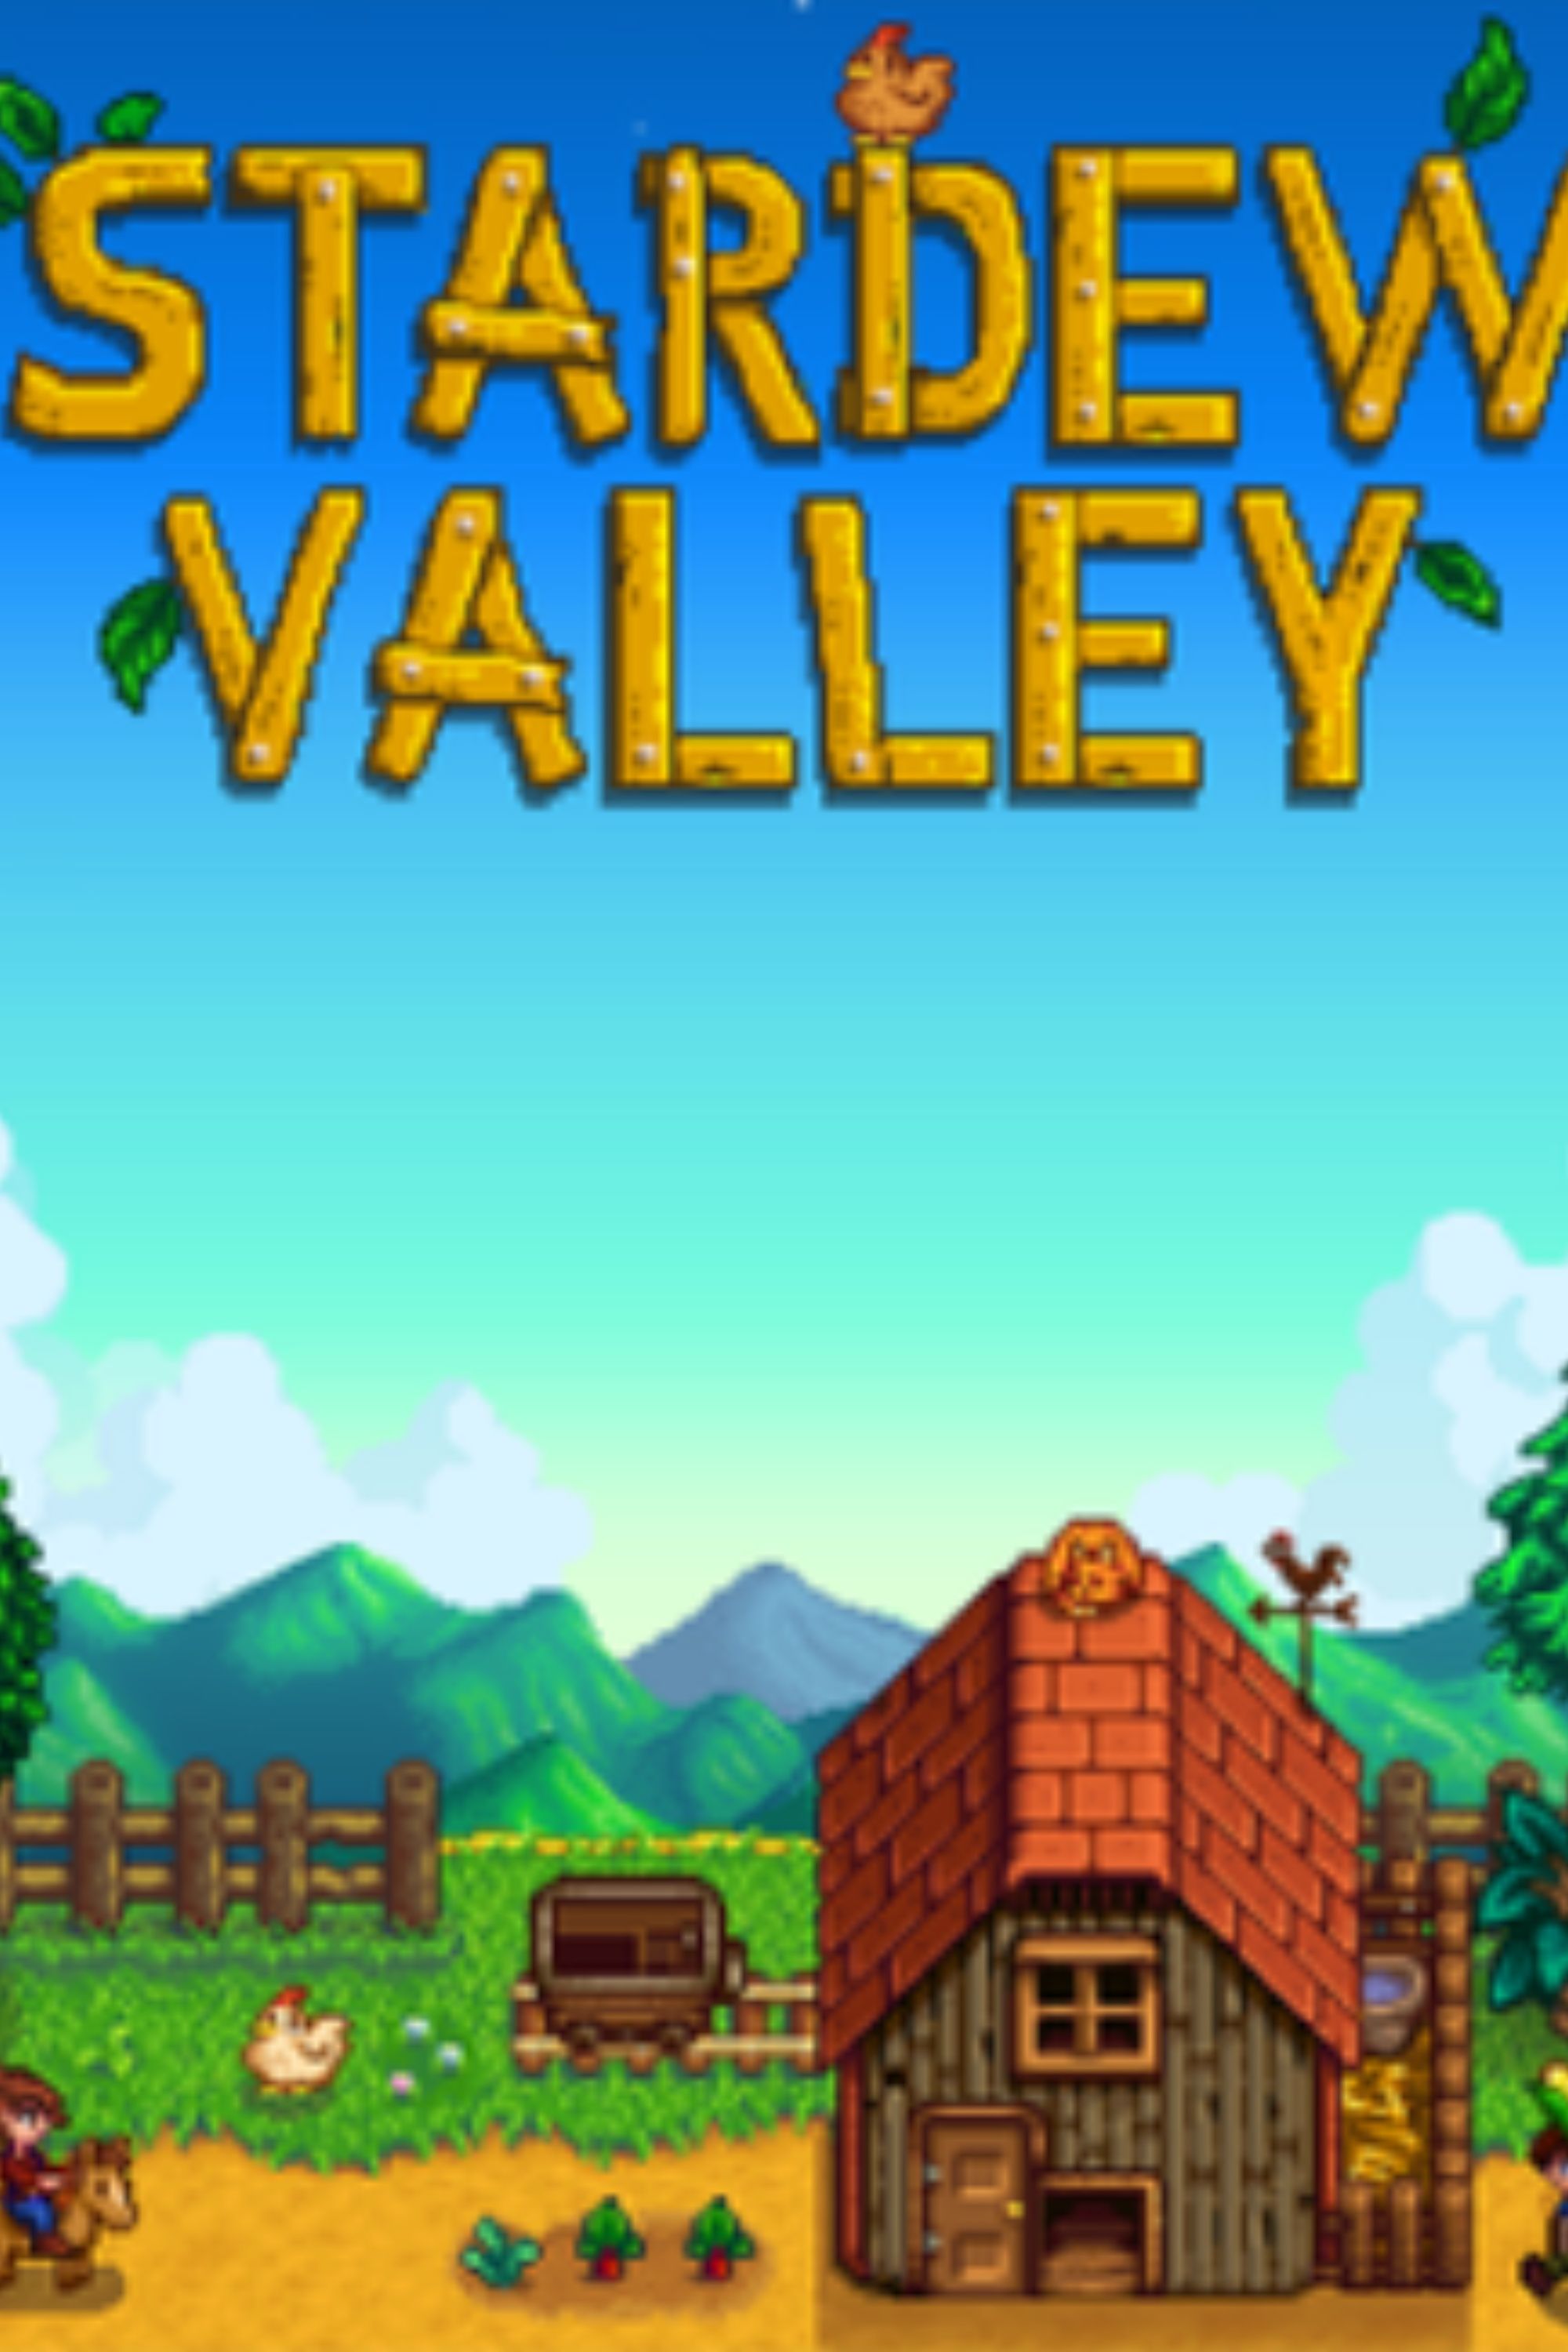 stardew valley cover art